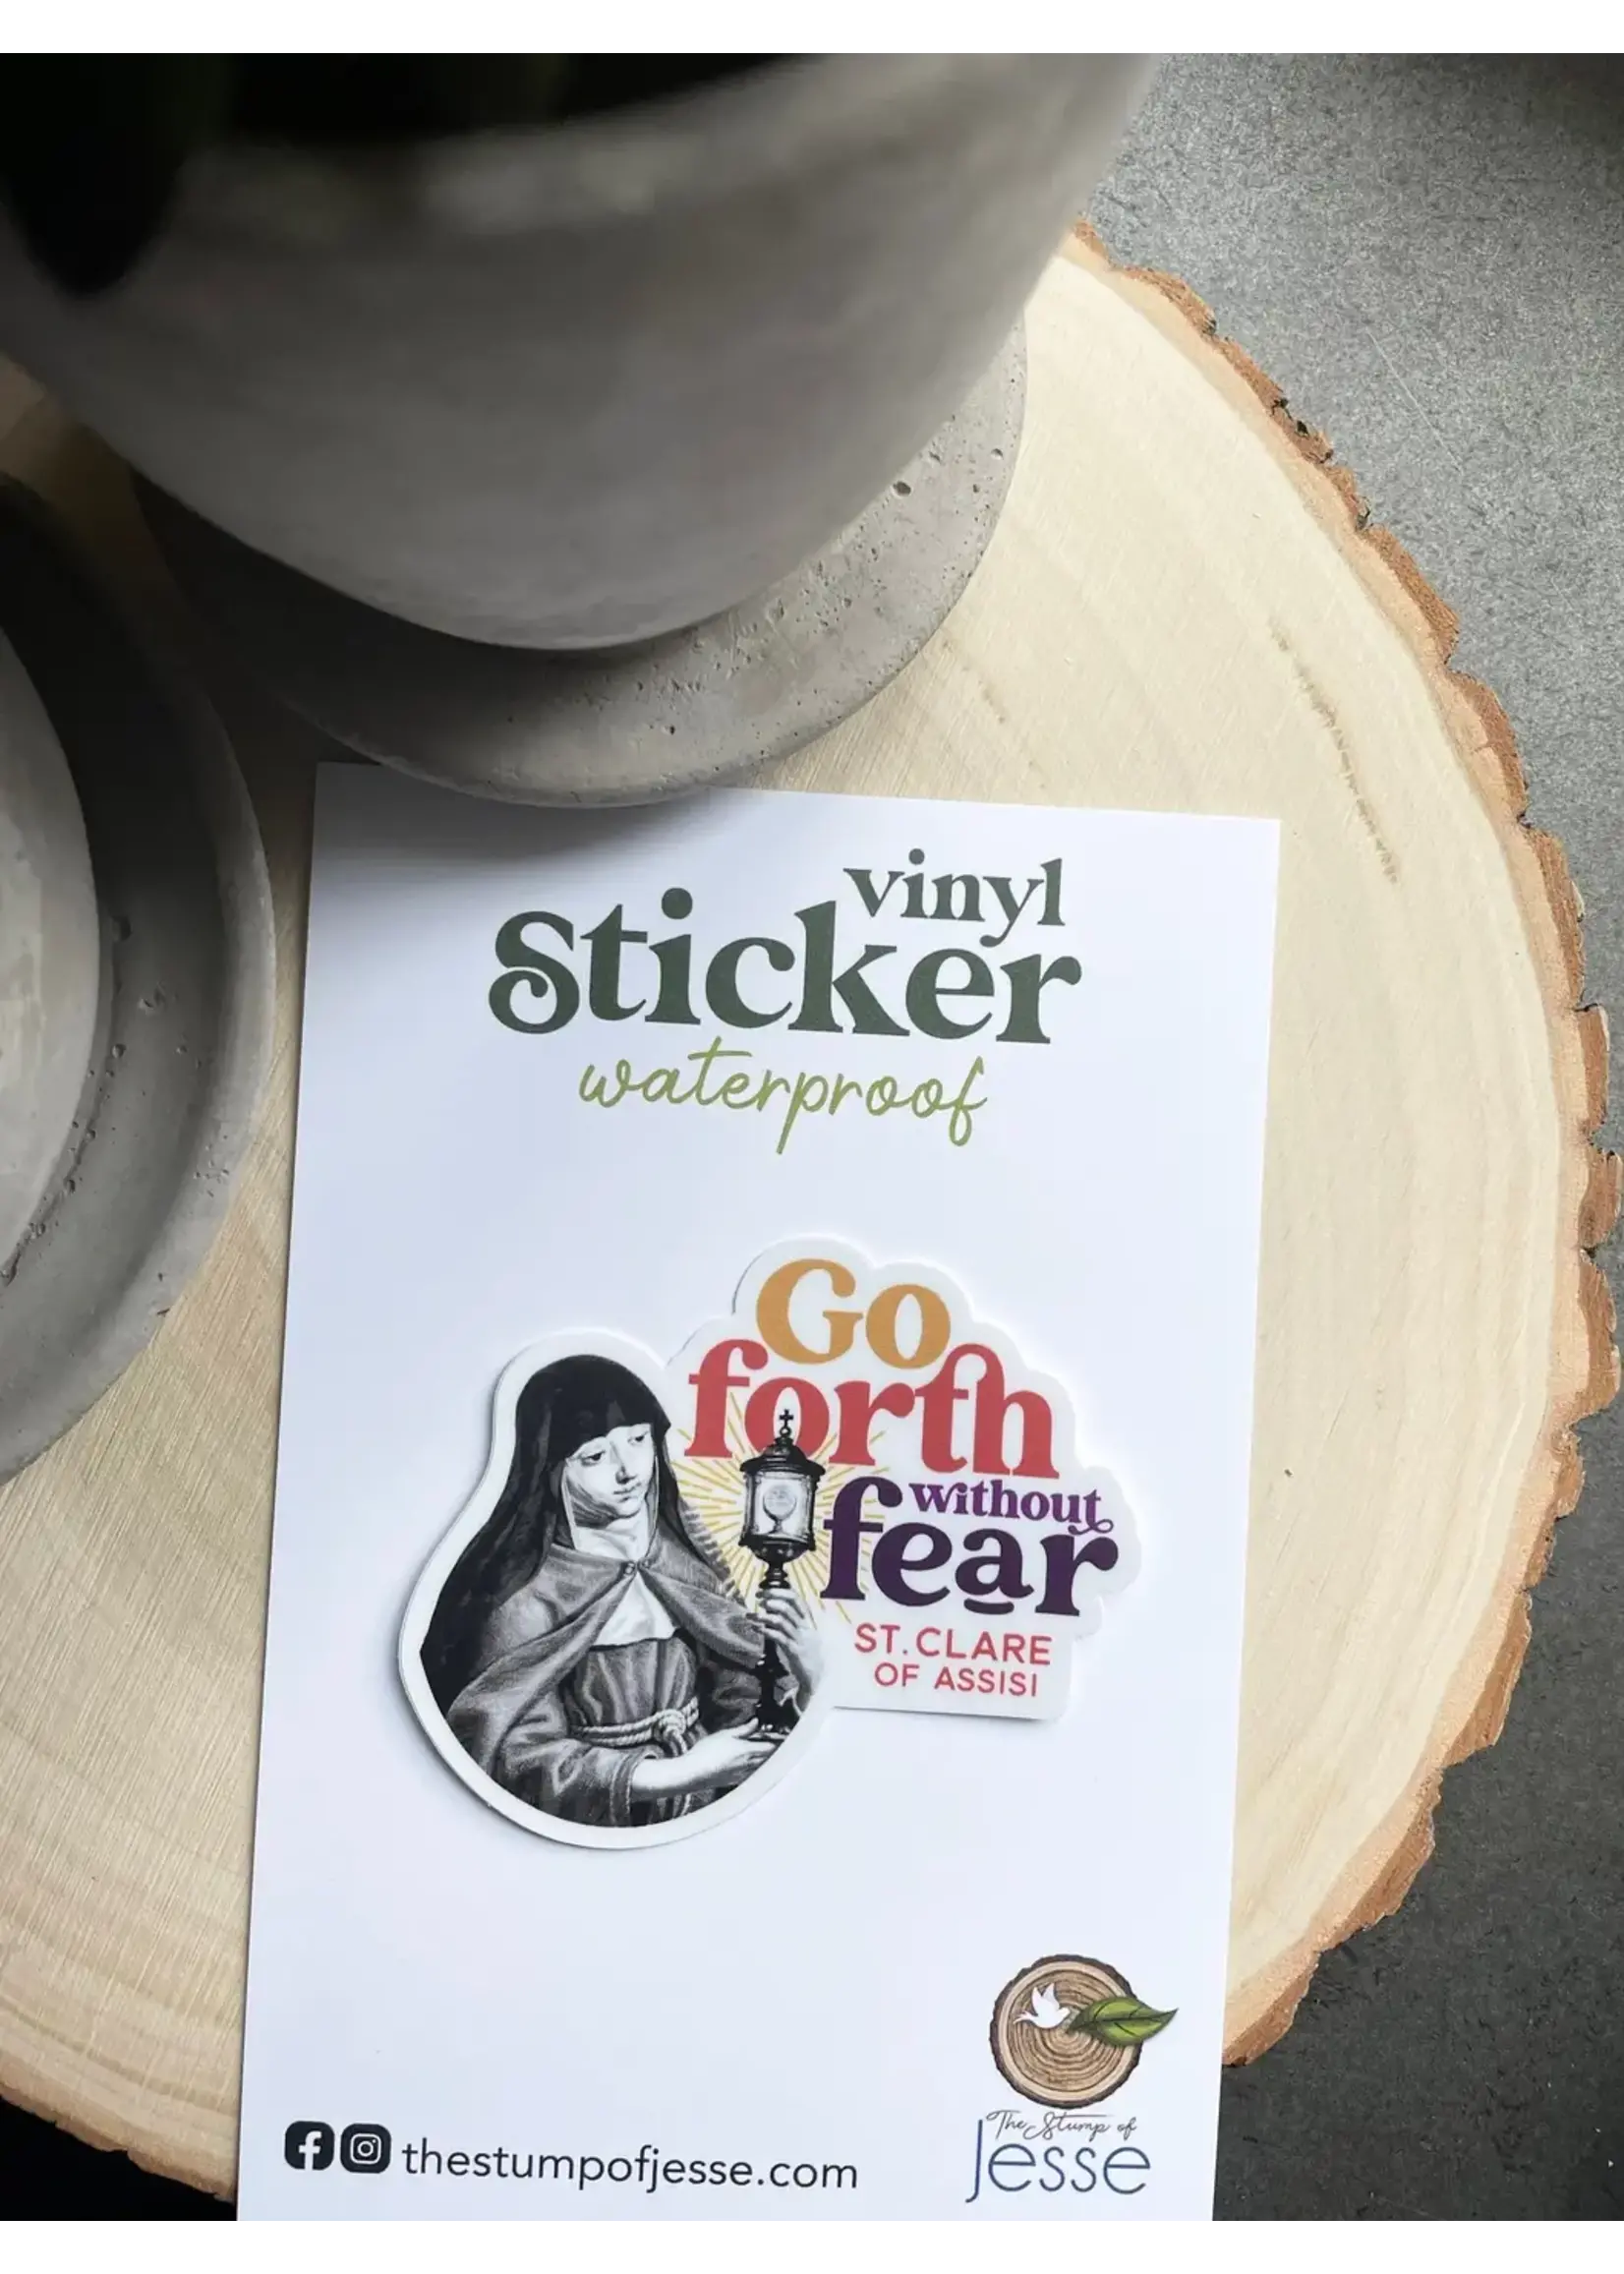 St Clare of Assisi Waterproof Vinyl Sticker